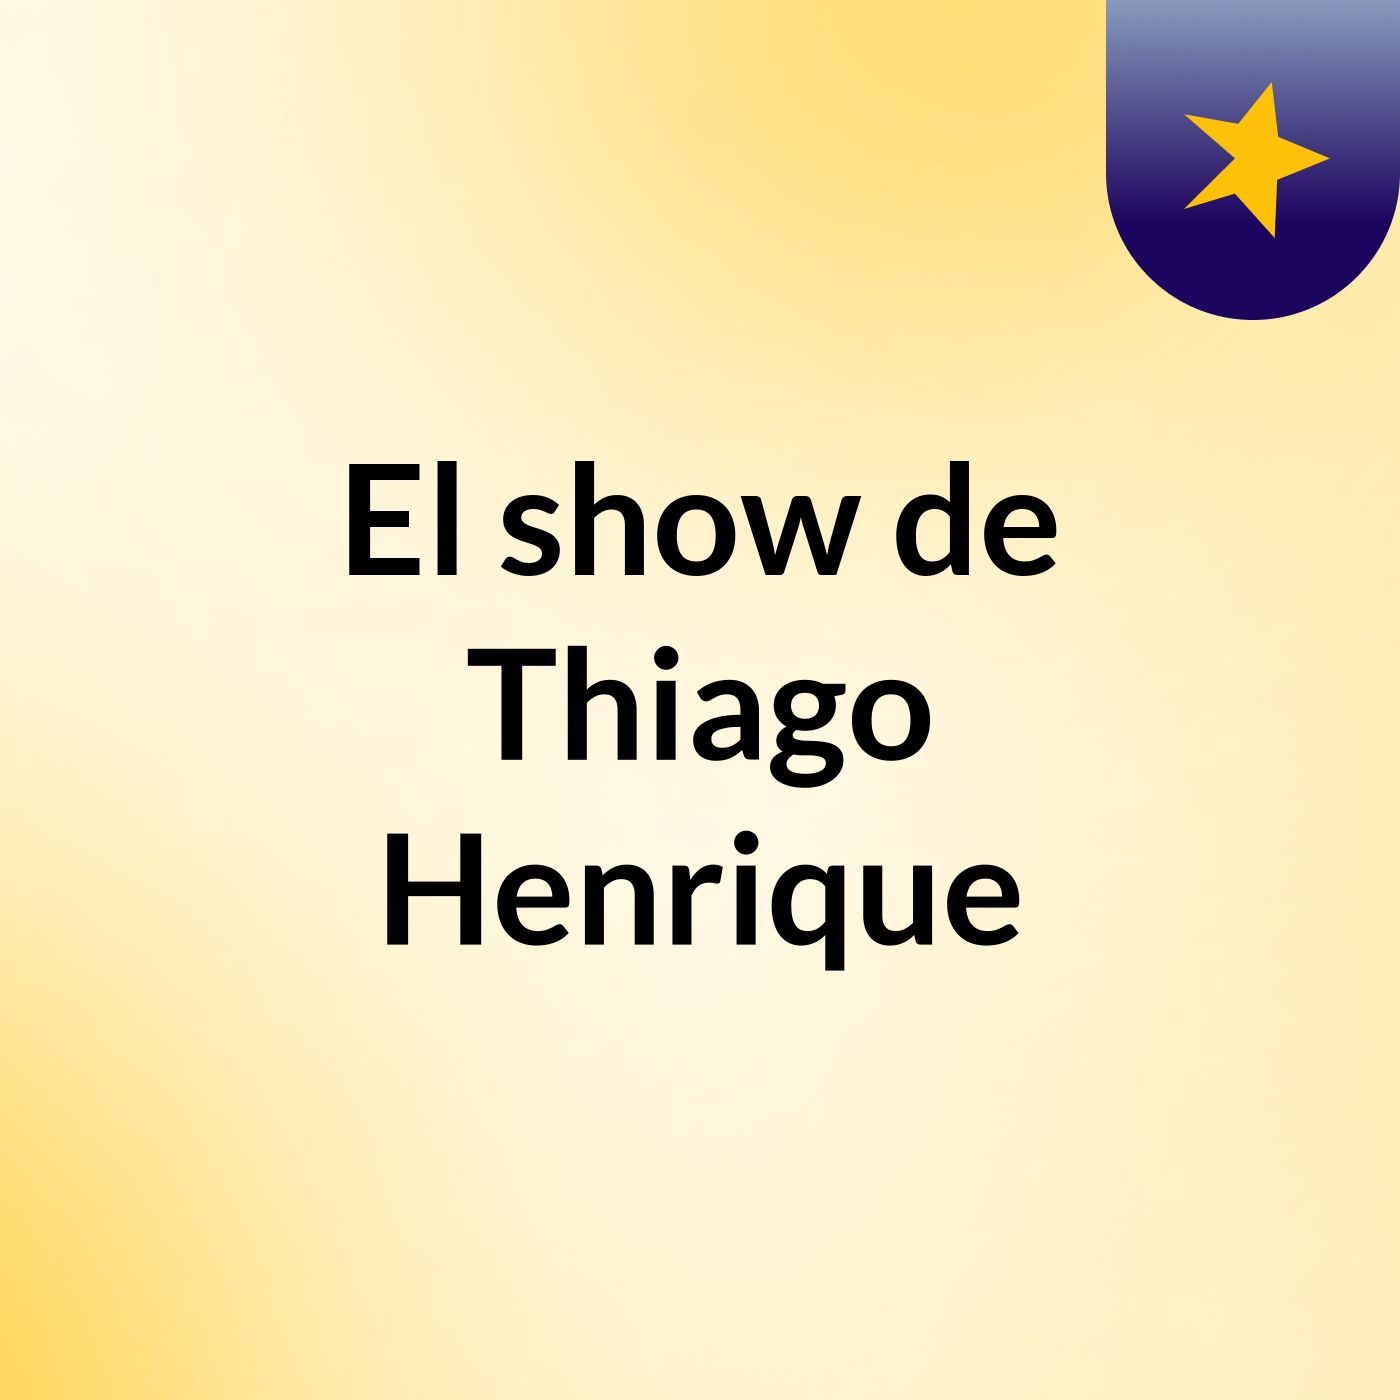 El show de Thiago Henrique